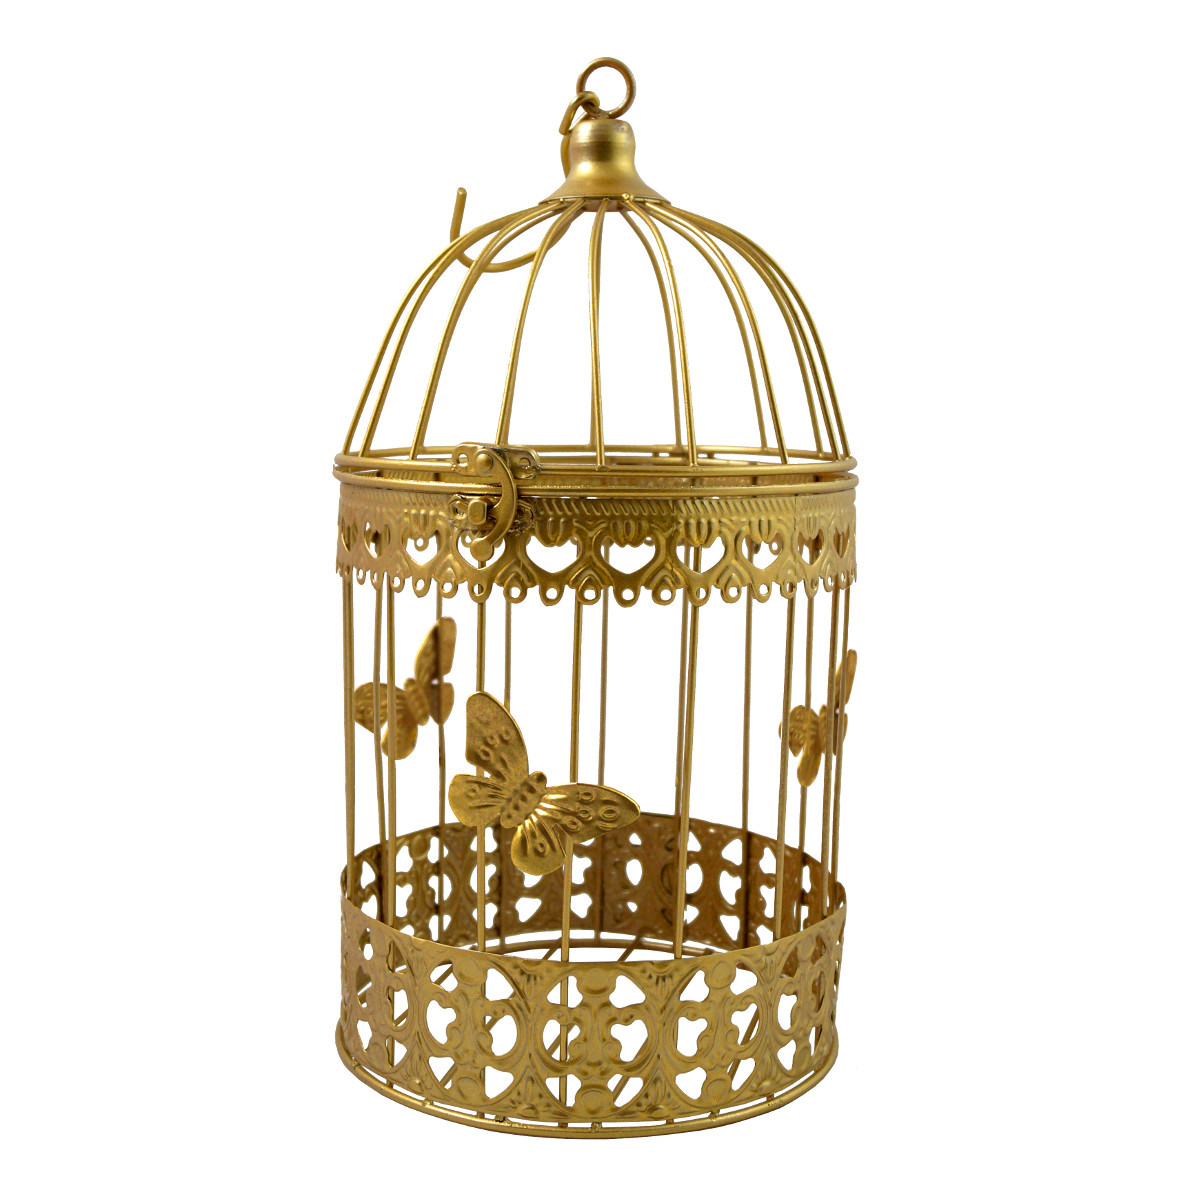 Deko Metall Vogel Käfig Dekokäfig im Antik Shabby Look gold mit Vogelmotiv 